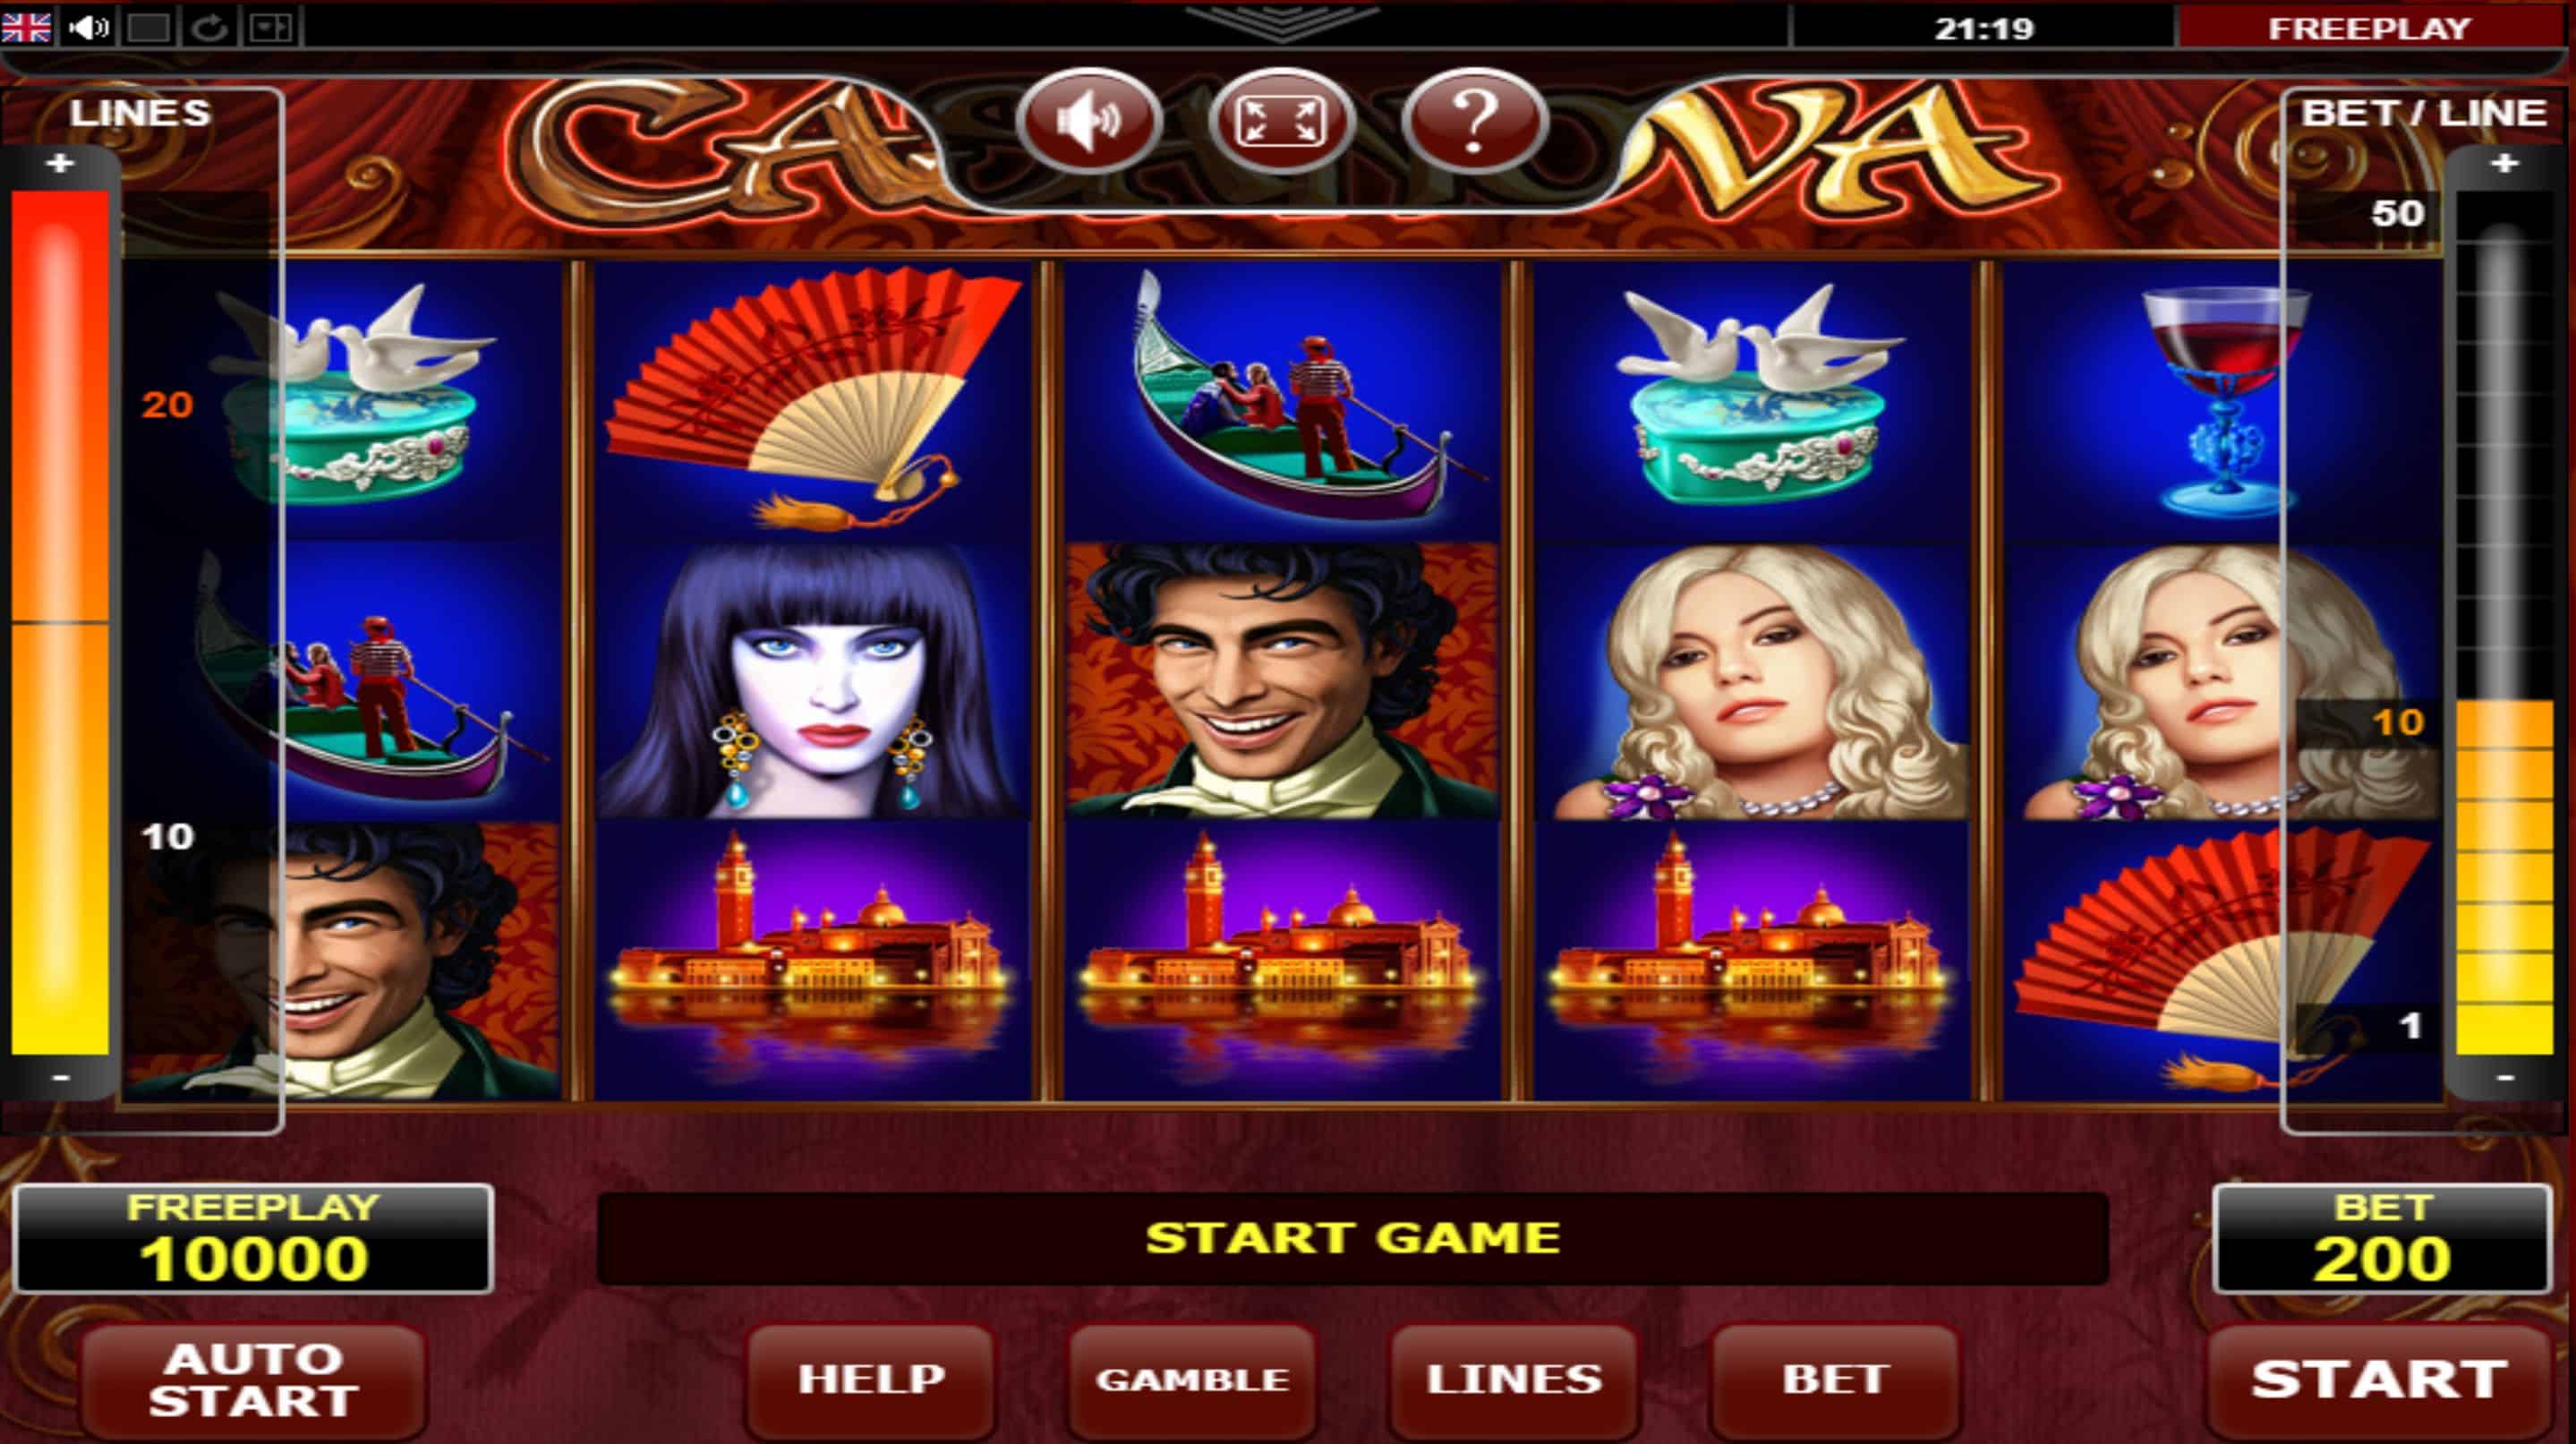 Casanova Slot Game Free Play at Casino Ireland 01